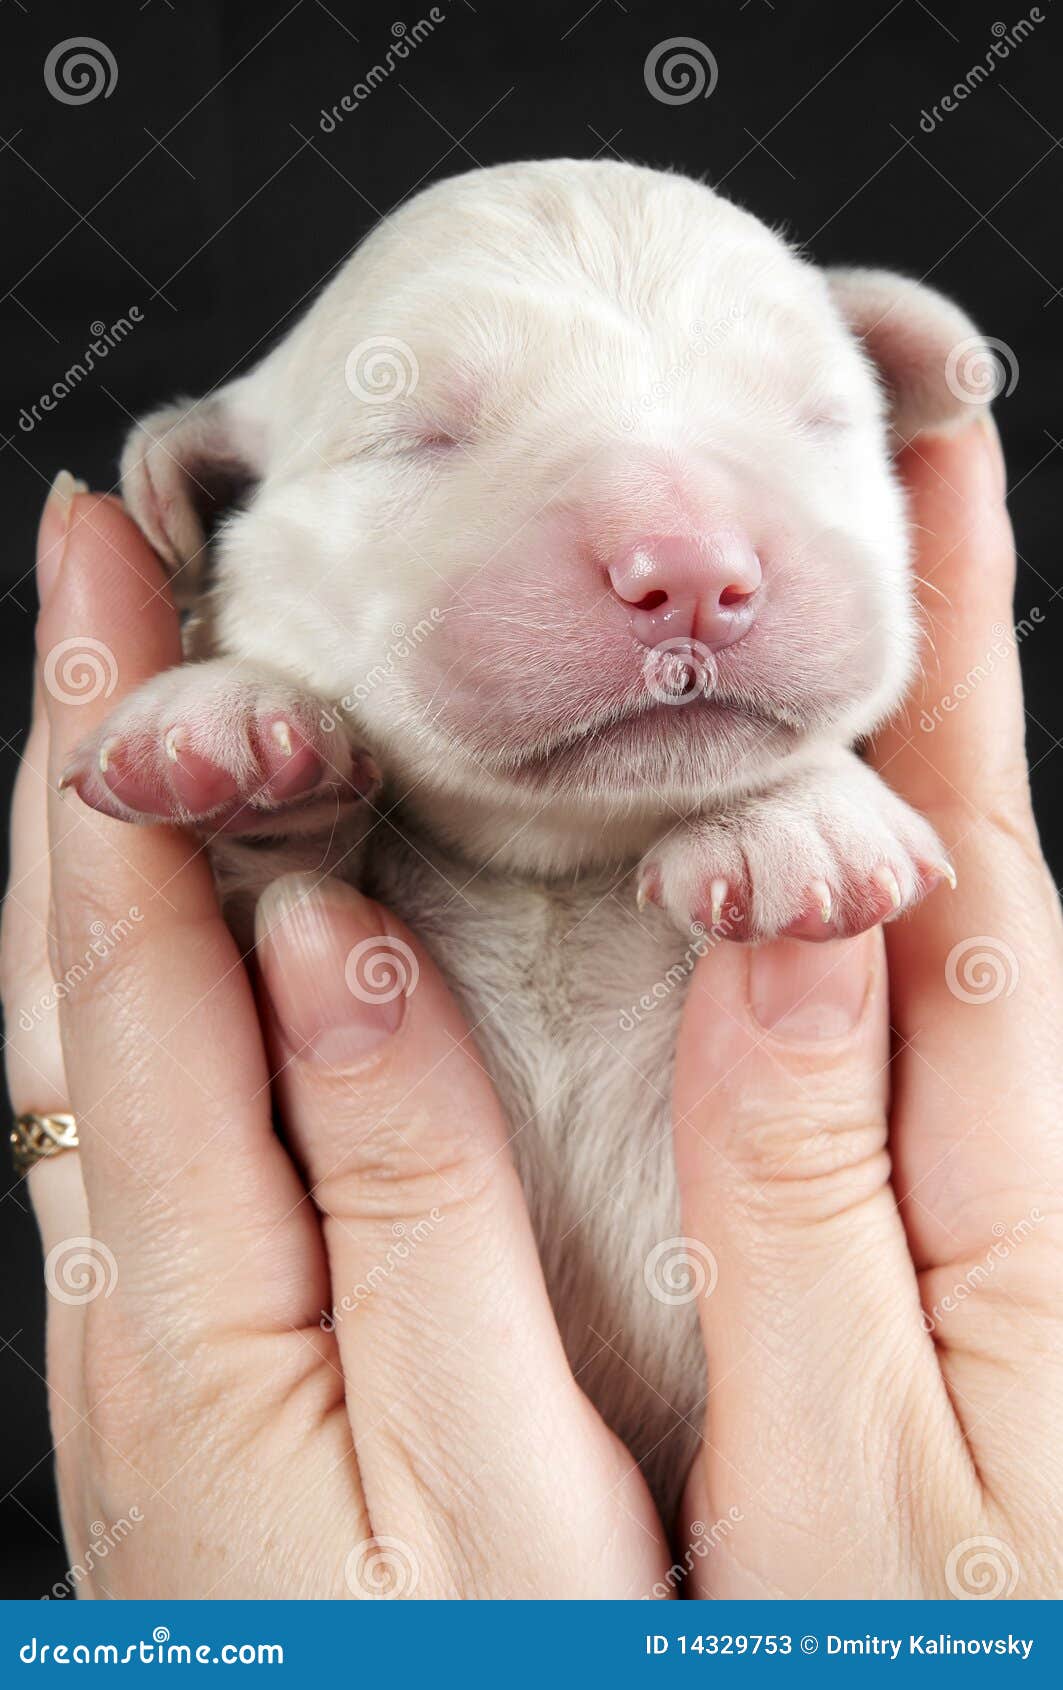 648 Newborn Golden Retriever Puppy Stock Photos - Free & Royalty-Free Stock  Photos from Dreamstime